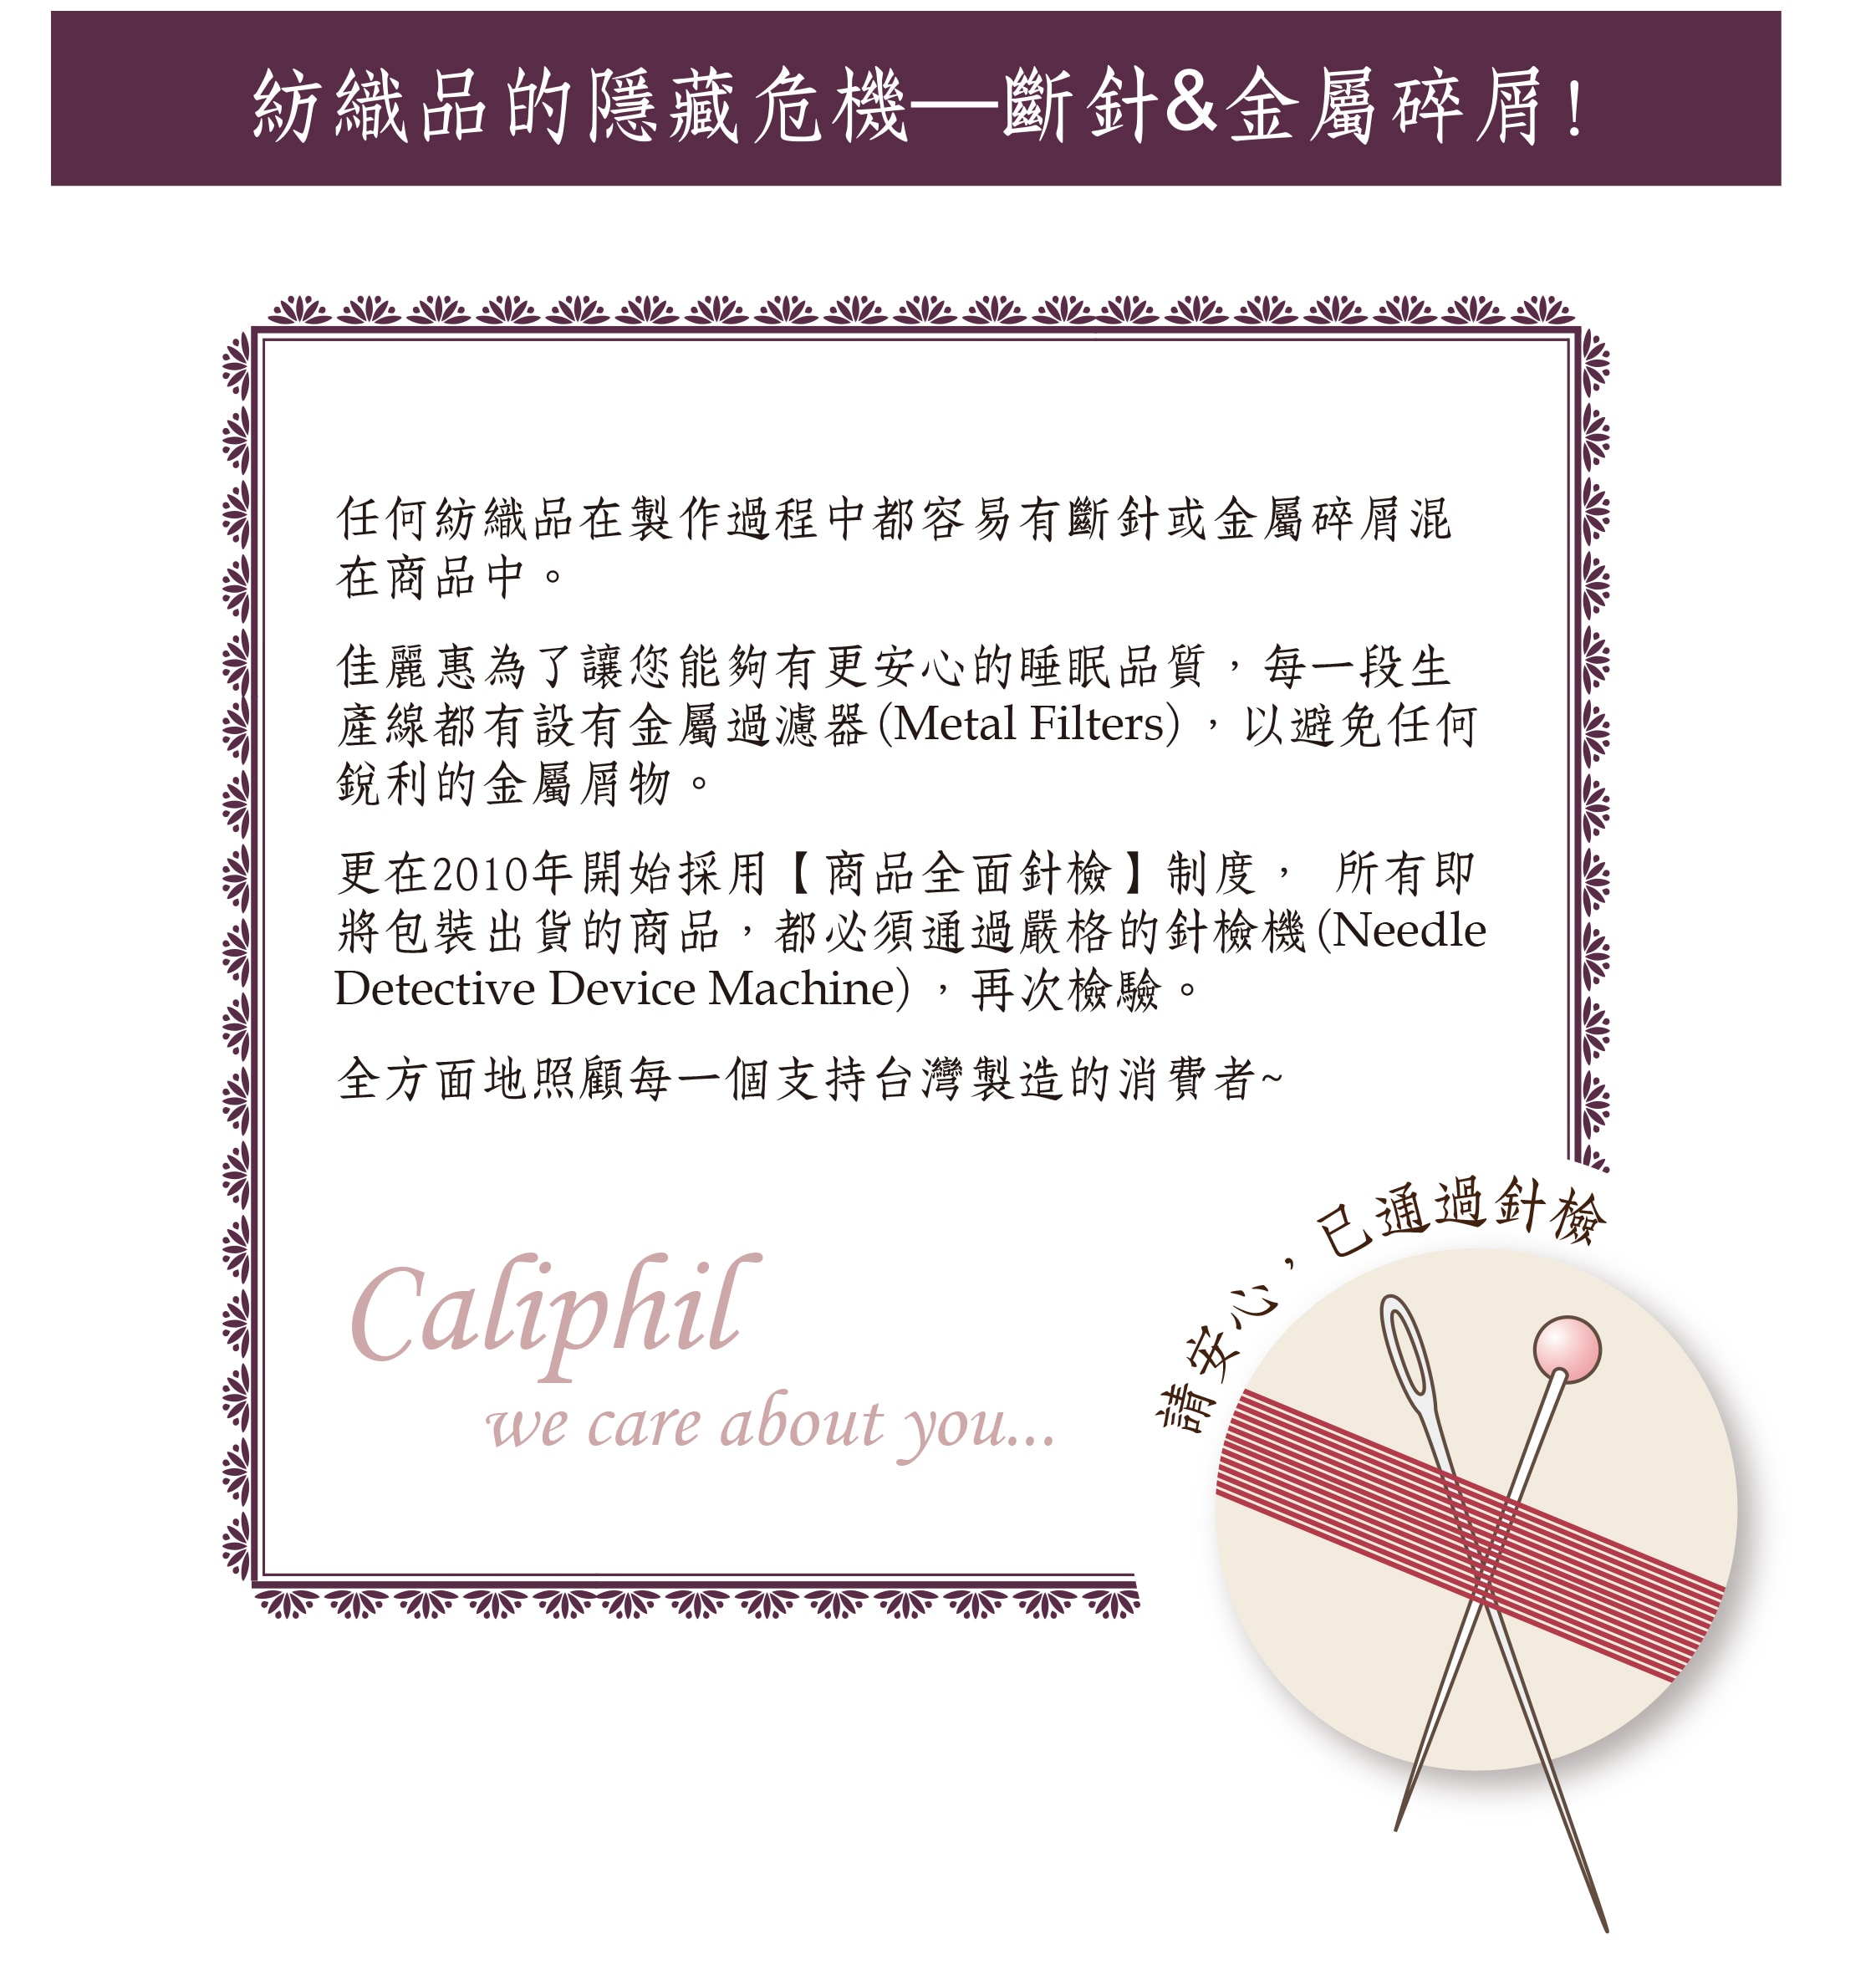 Caliphil 單人素色床包(紫)採用商品全面針檢制度,避免斷針及金屬碎屑。